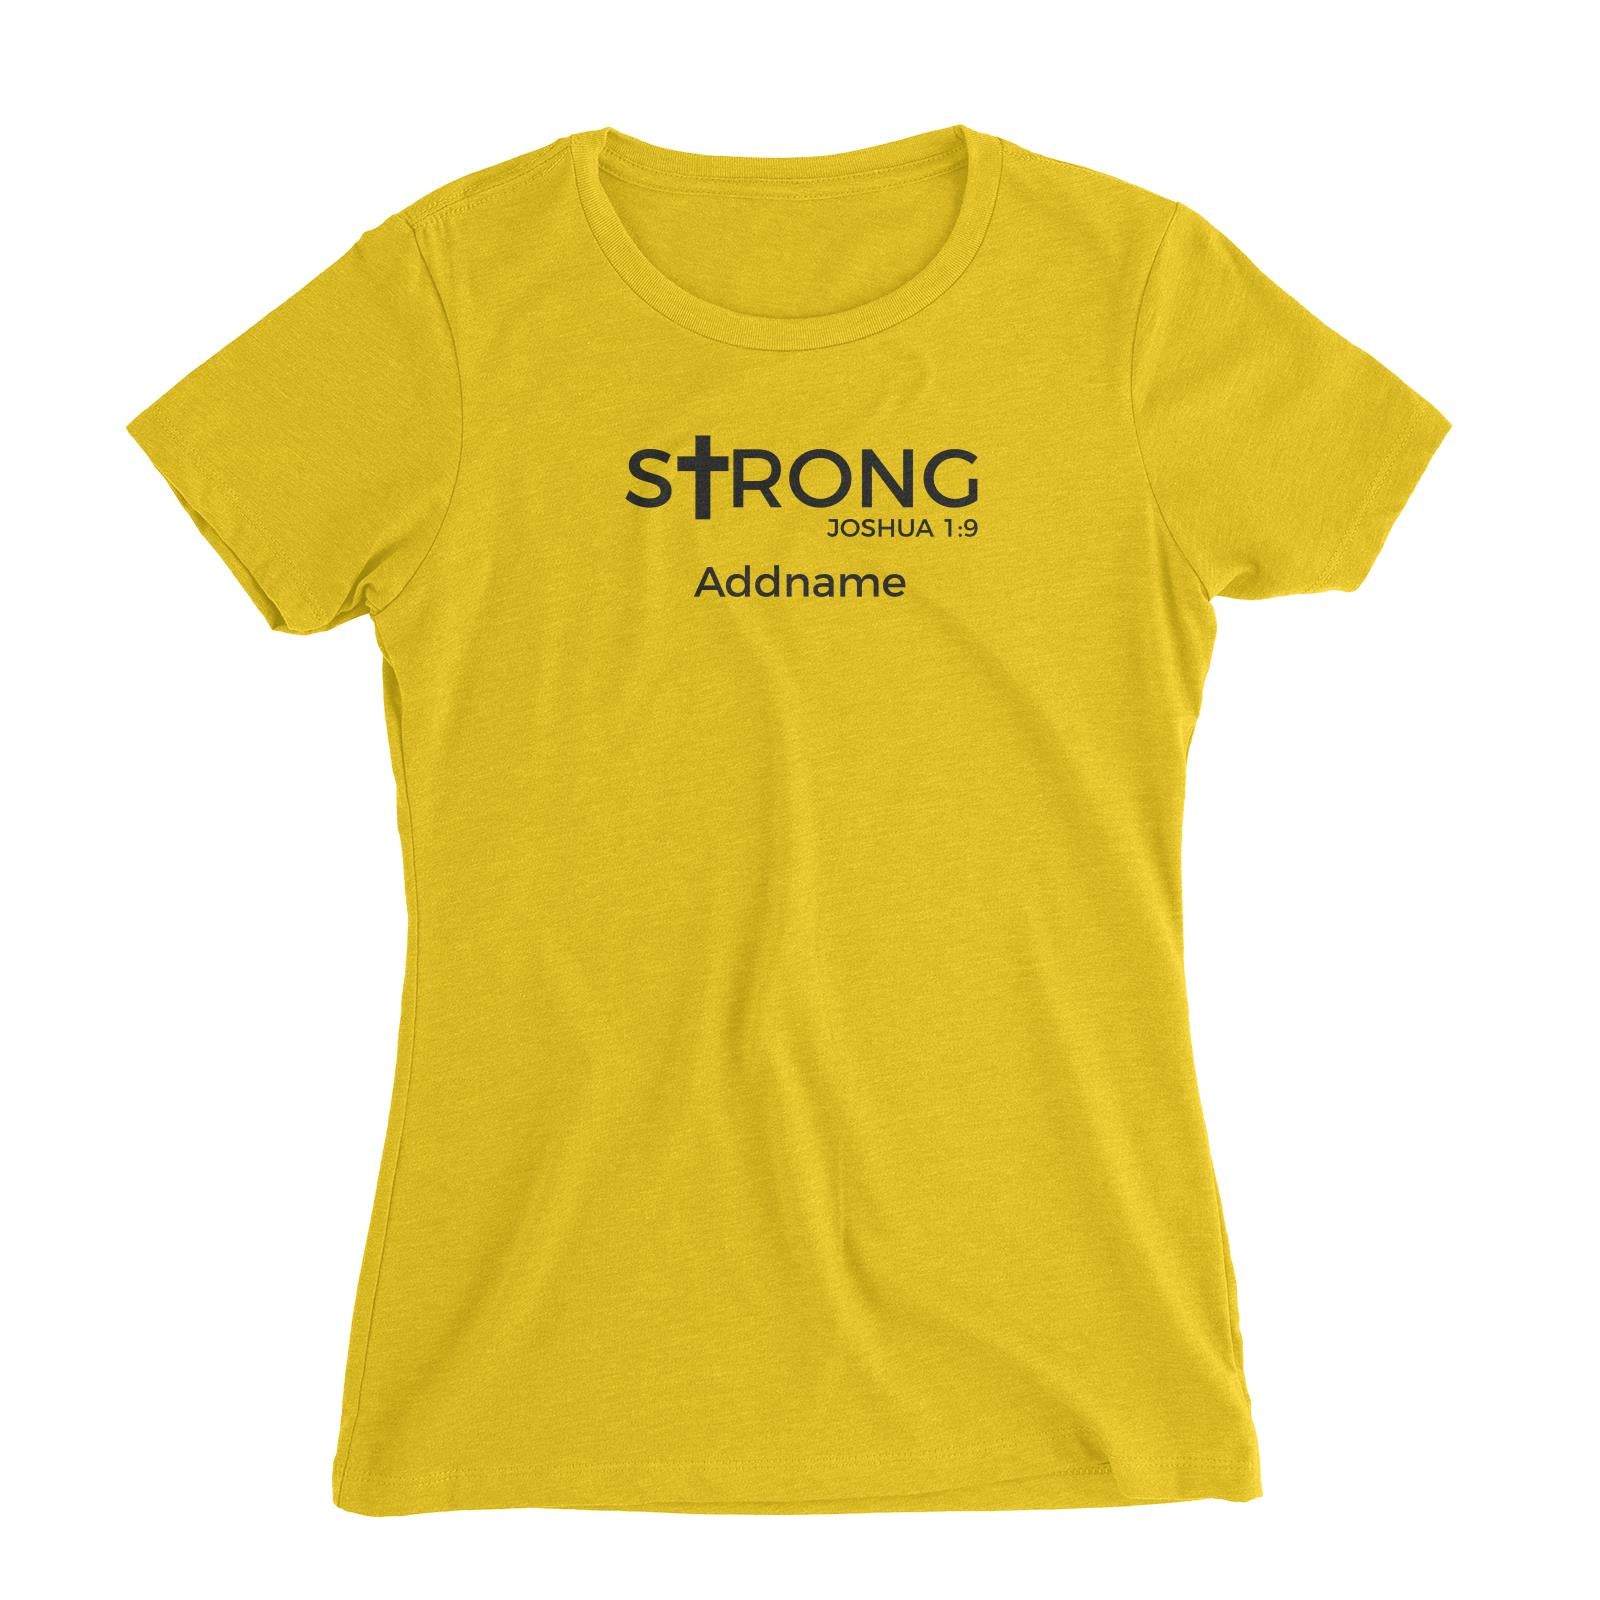 Christian Series Strong Joshua 1.9 Addname Women Slim Fit T-Shirt